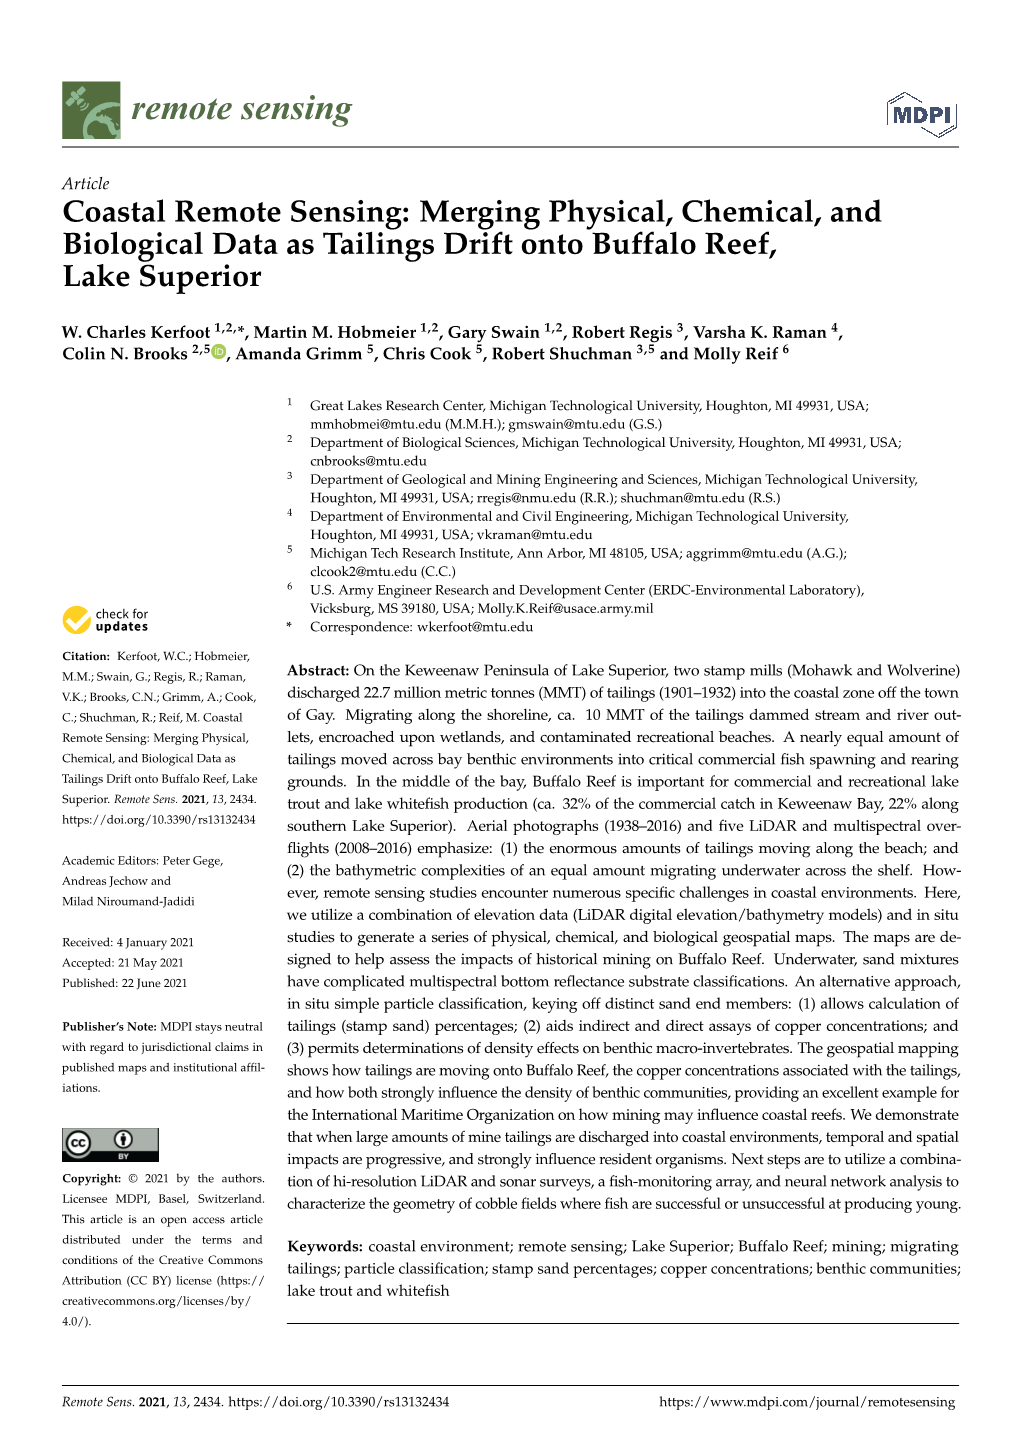 Coastal Remote Sensing: Merging Physical, Chemical, and Biological Data As Tailings Drift Onto Buffalo Reef, Lake Superior